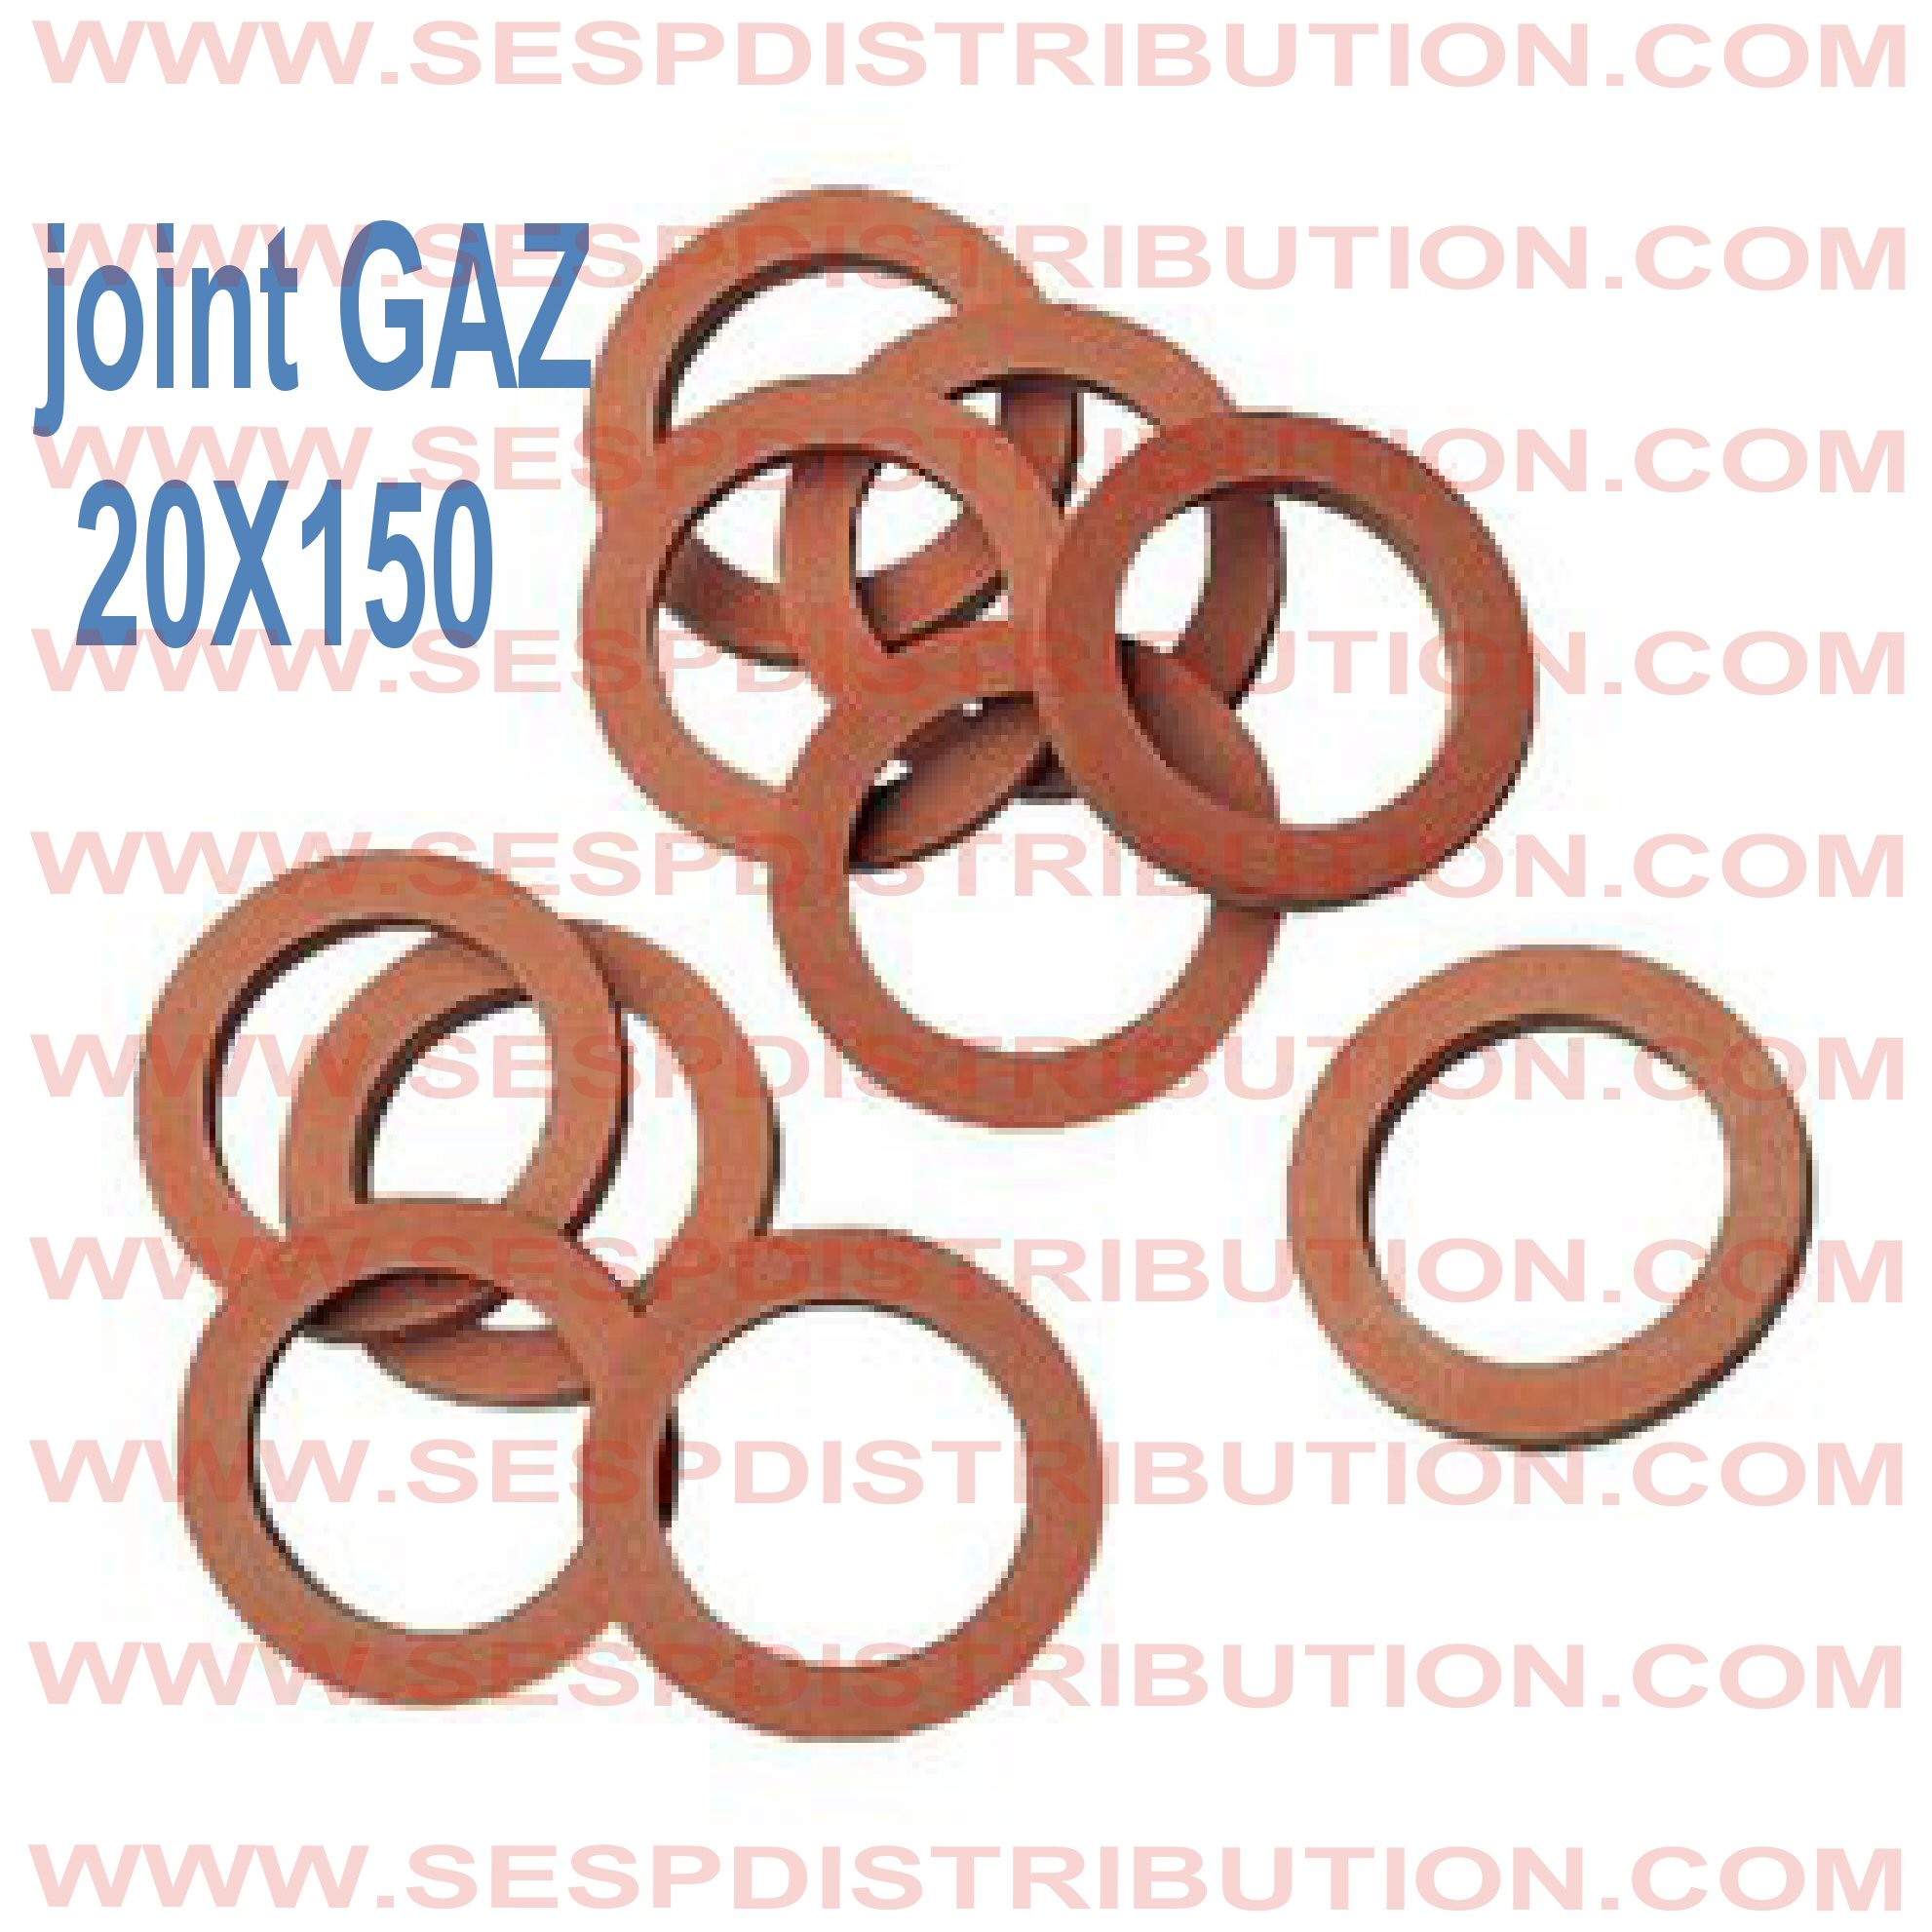 joint GAZ détendeur butane propane 18x11x2xmm - sespdistribution